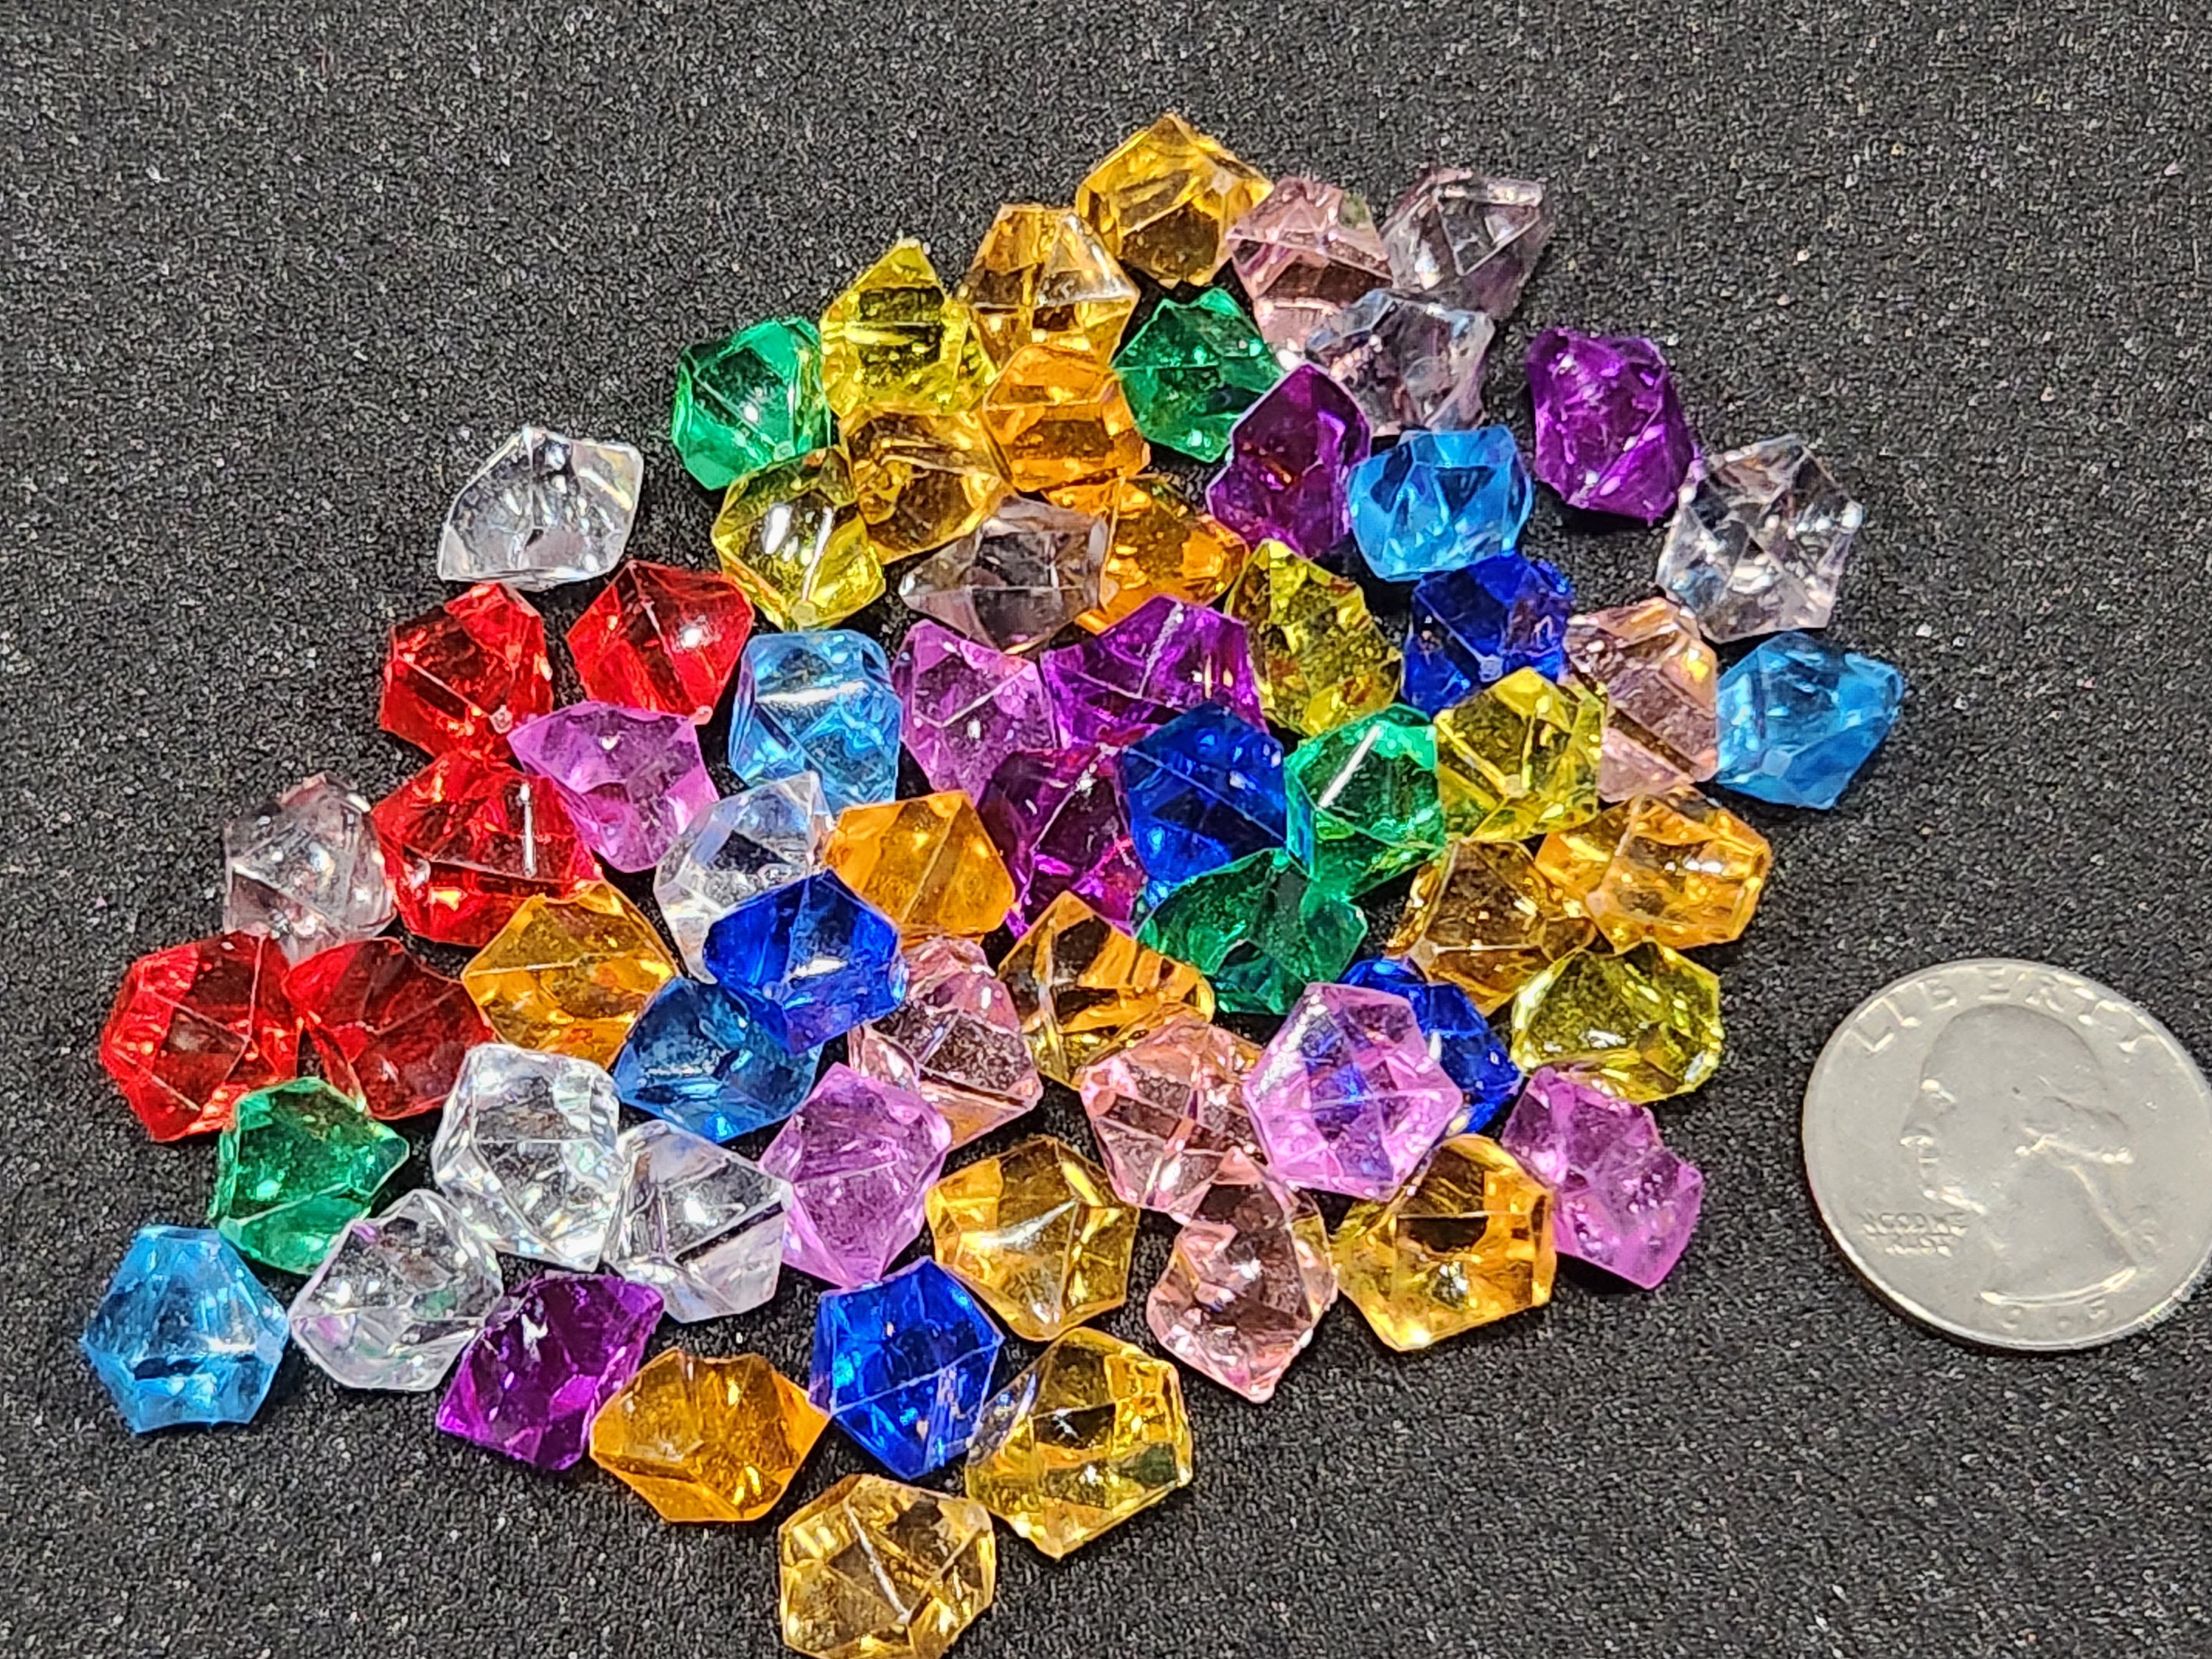 Bejeweled Gems Replacement Pieces Plastic 12 Pieces + 1 Power Gem Choose  Color